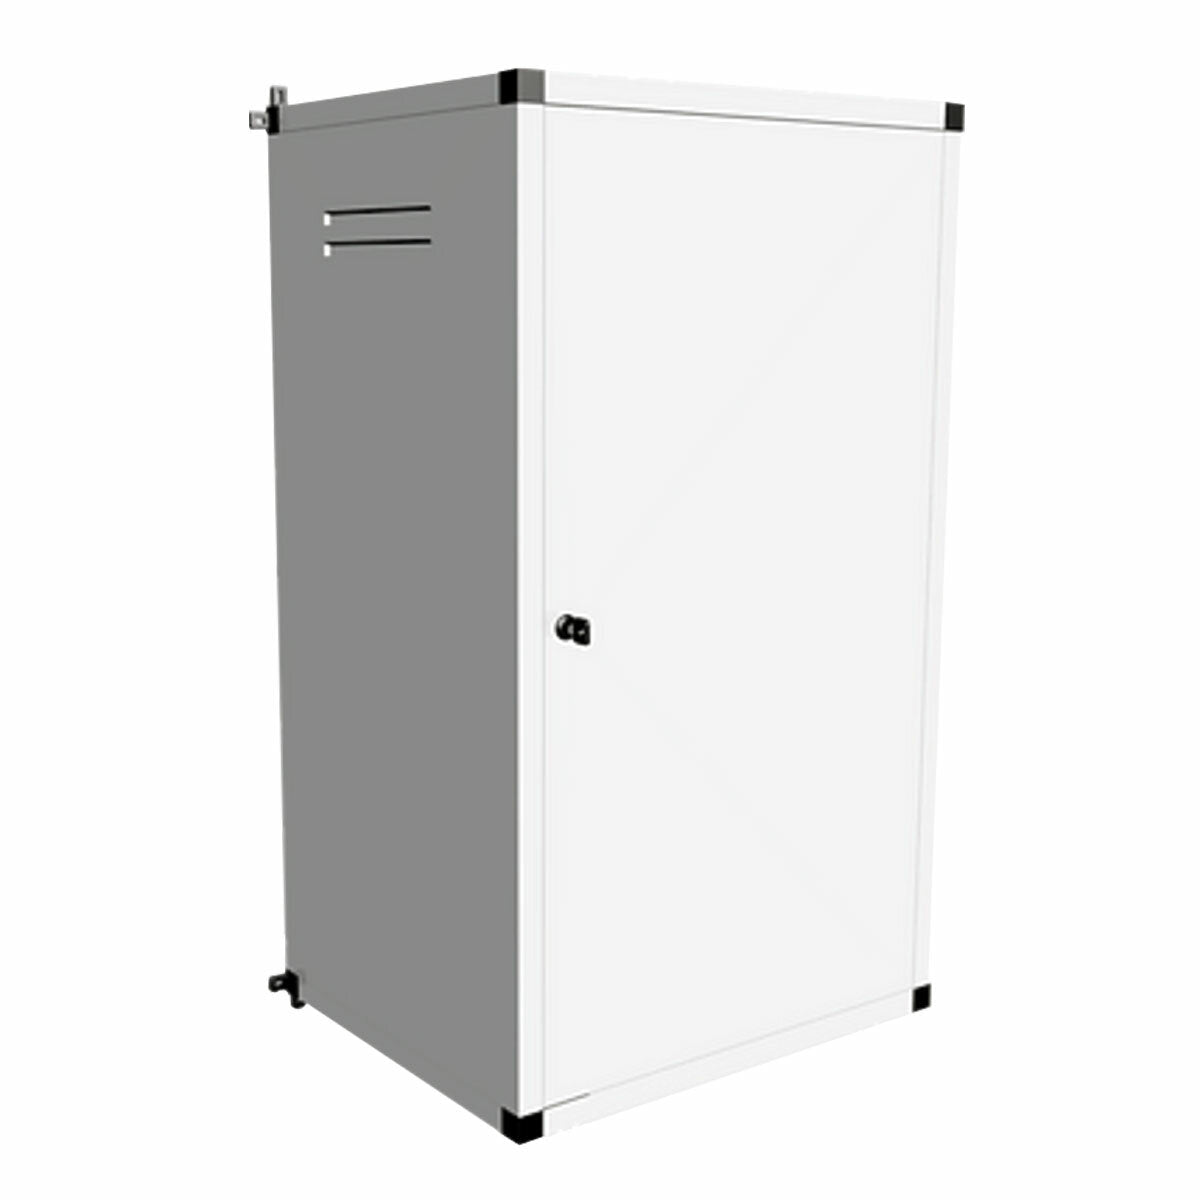 White universal water heater cover boiler cover box H 85 cm - W 50 cm - D 32 cm